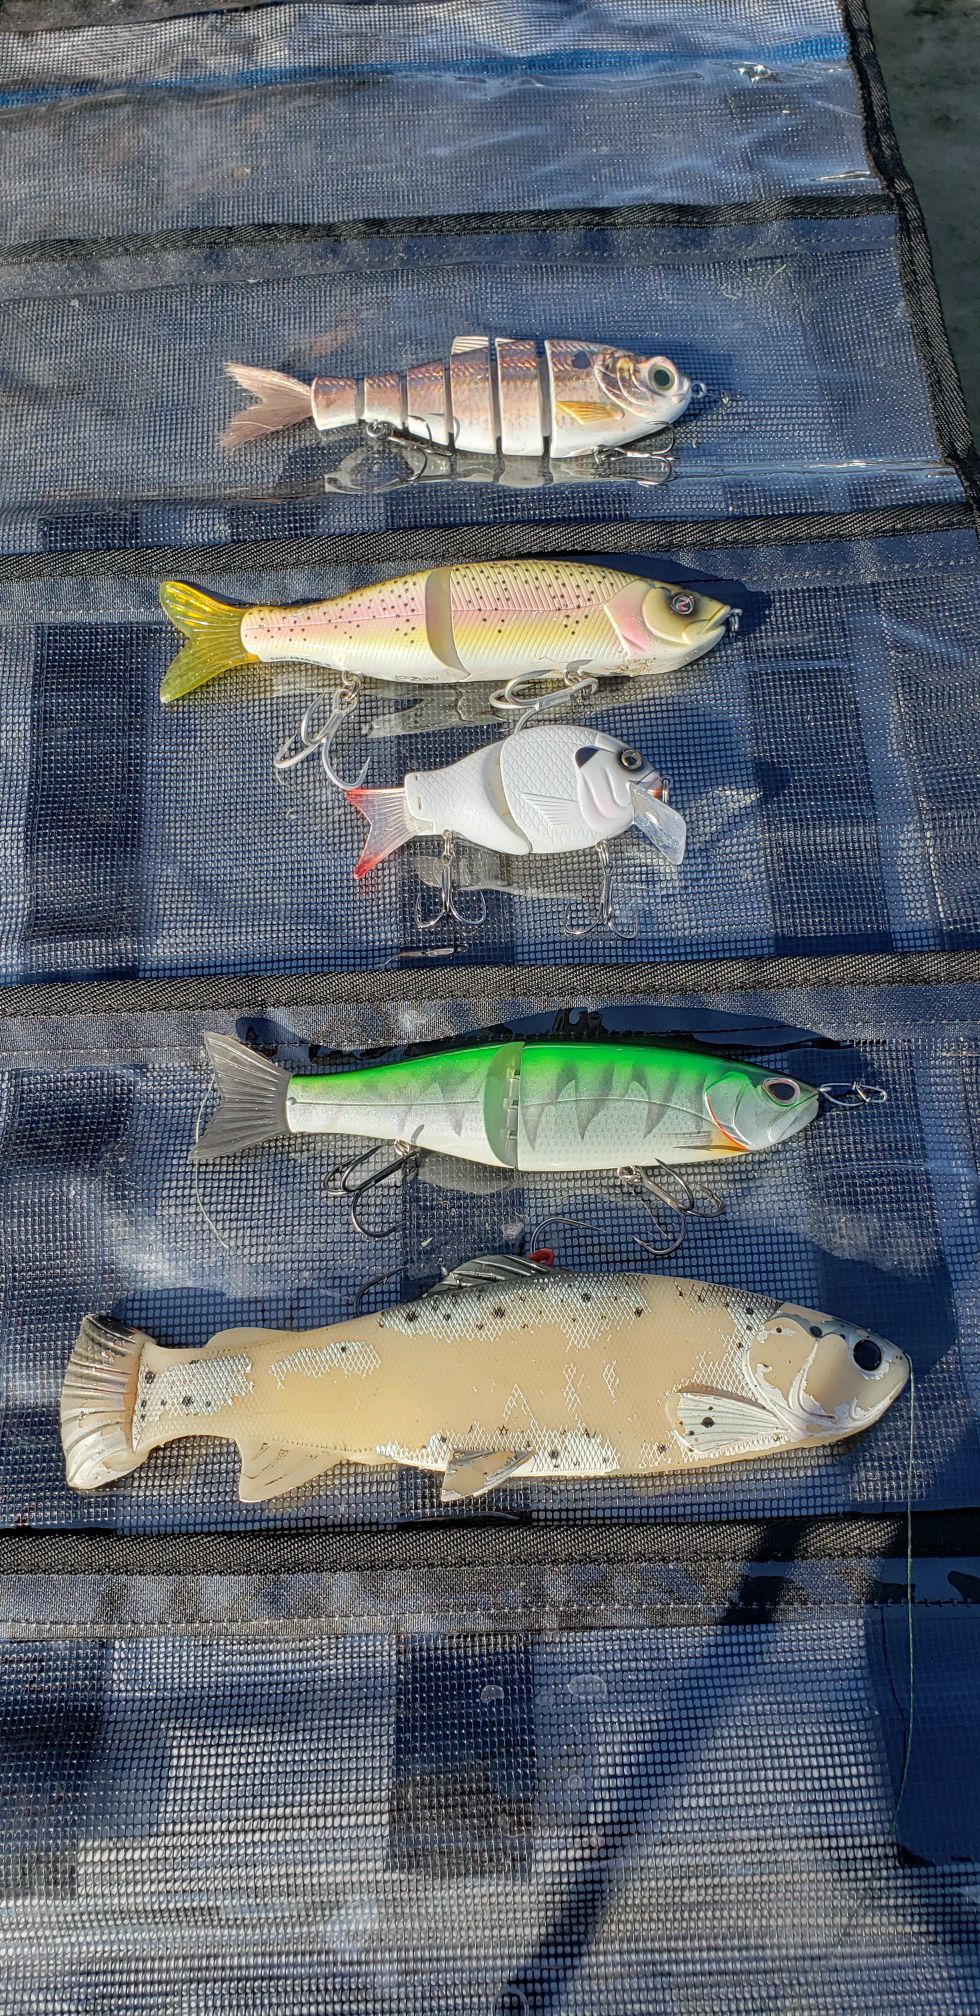 Swimbait Fishing Lot, Rod & Reel and Tackle Bag